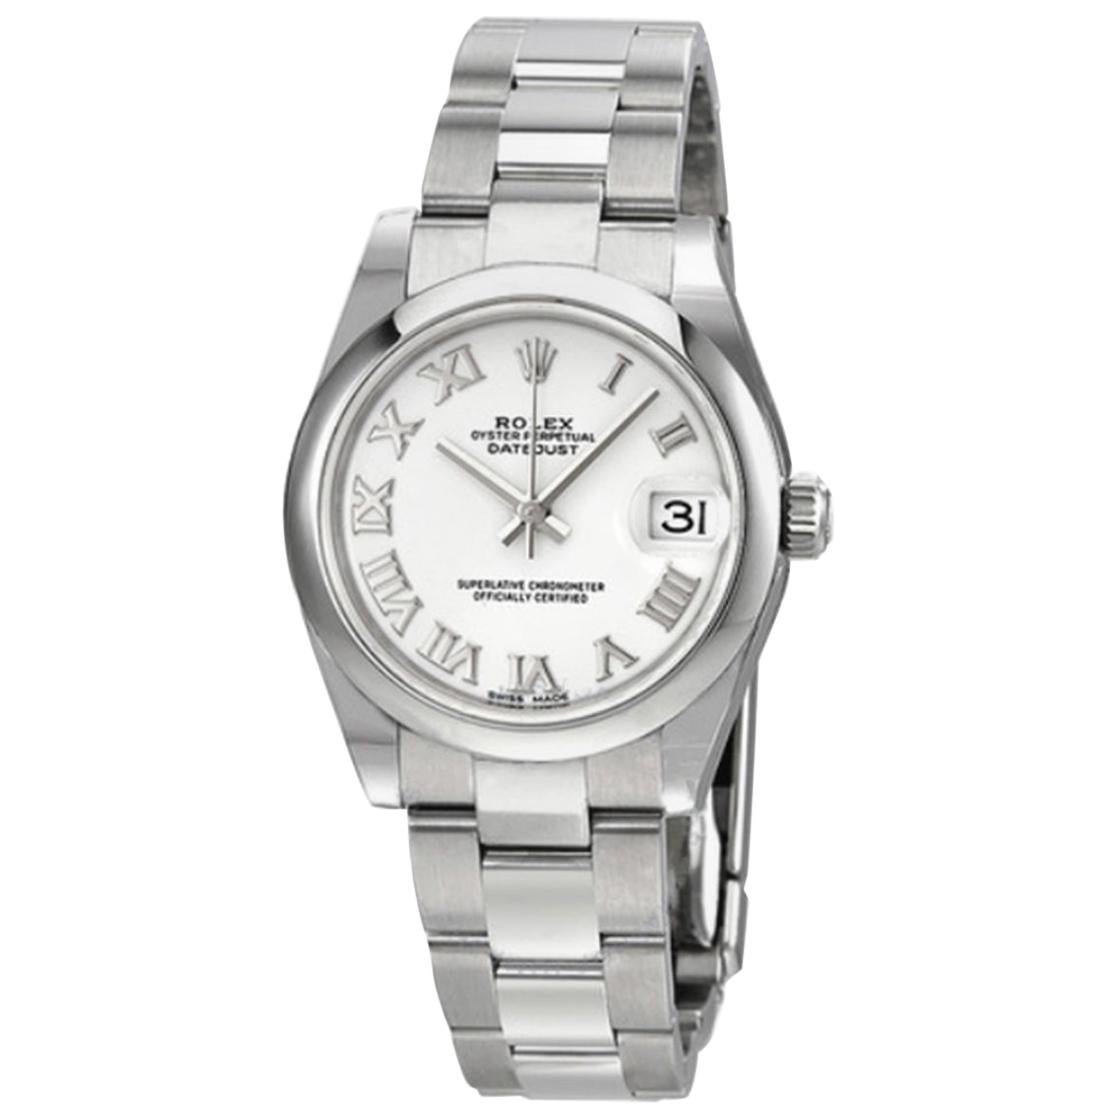 Rolex Datejust 31 Steel White Roman Numerals Dial Automatic Midsize Watch 178240